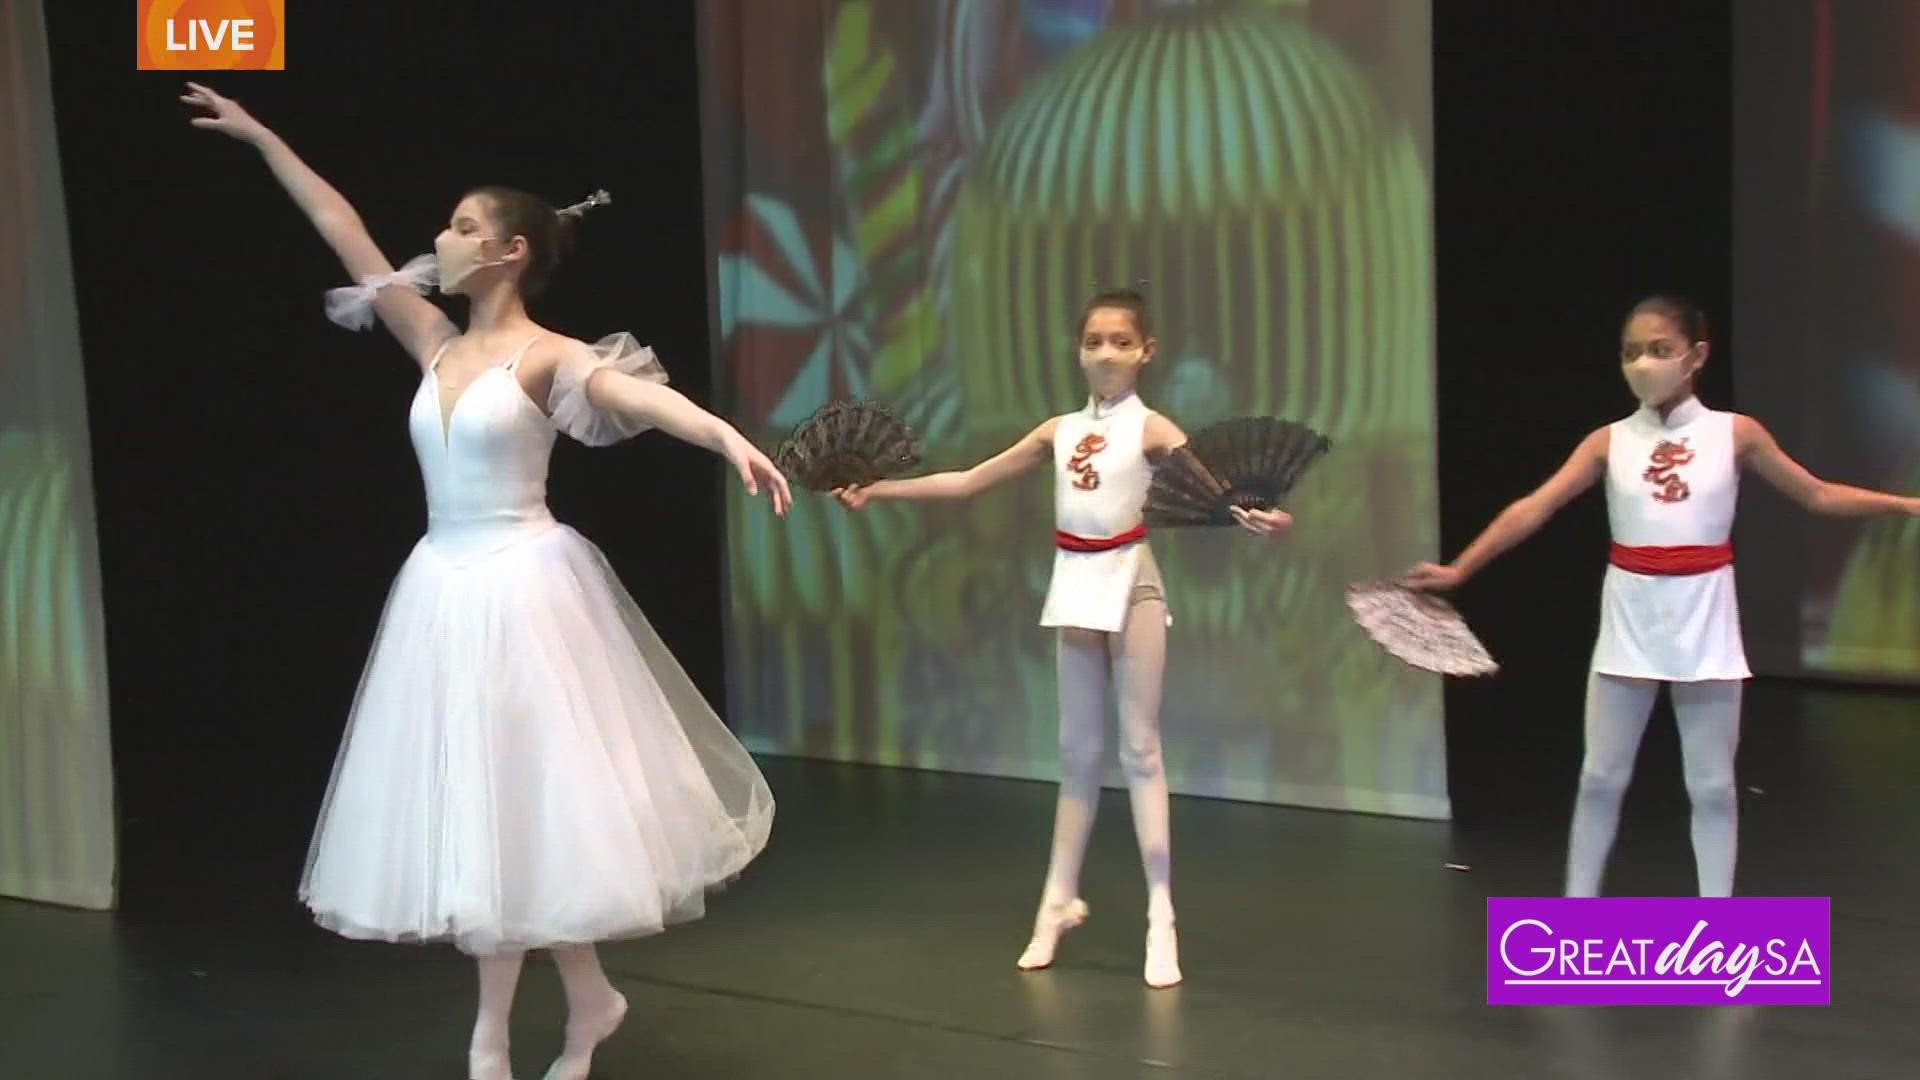 The Children's Ballet of San Antonio